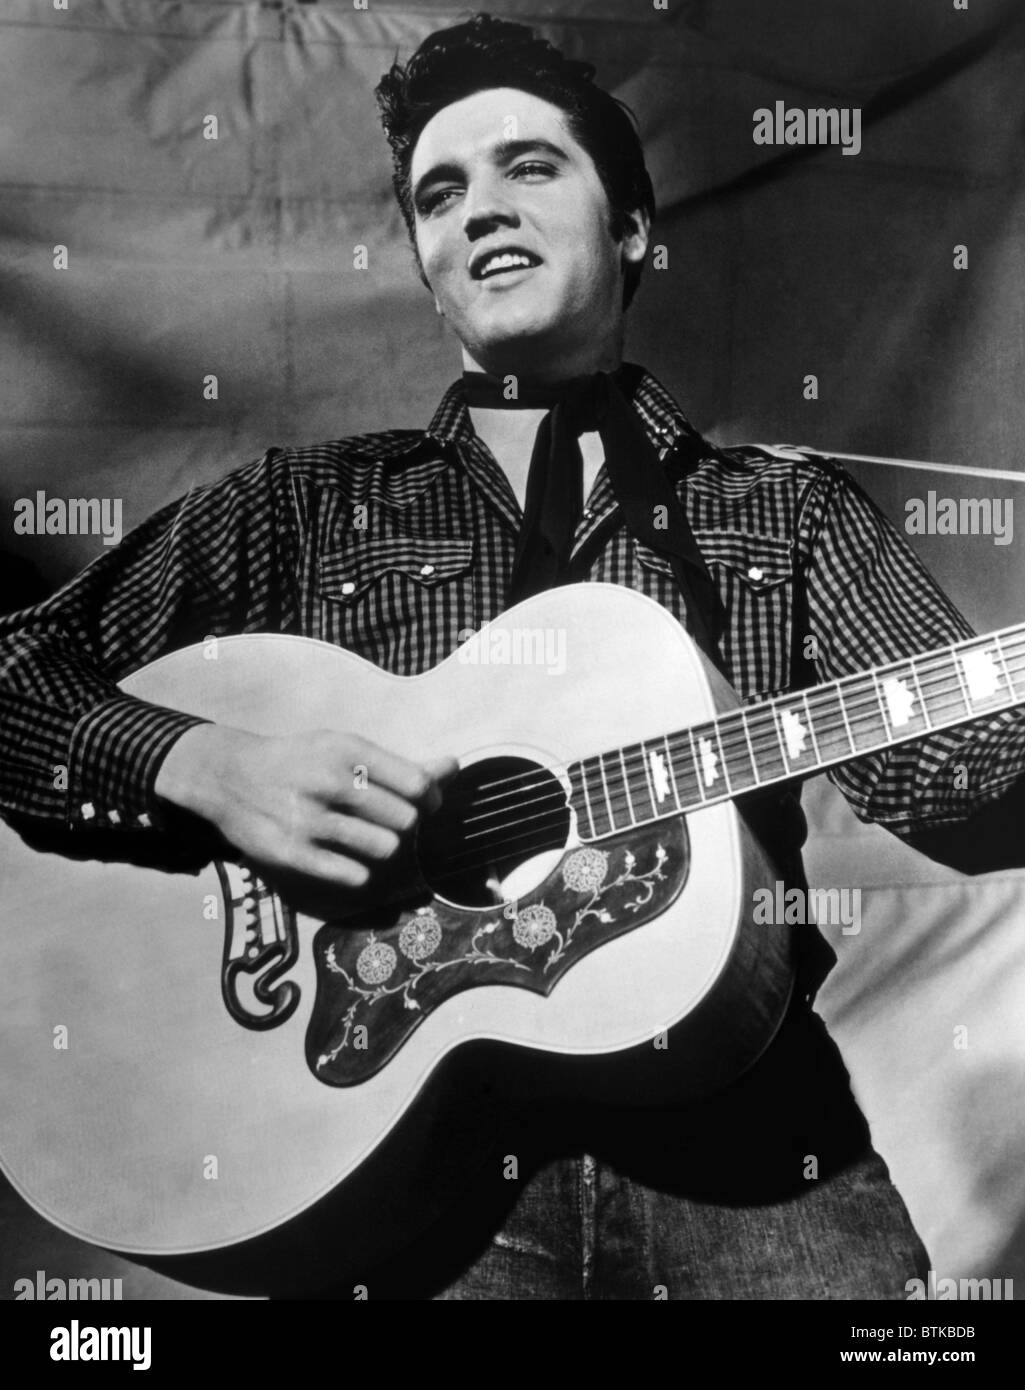 KING CREOLE, Elvis Presley, 1958 Banque D'Images